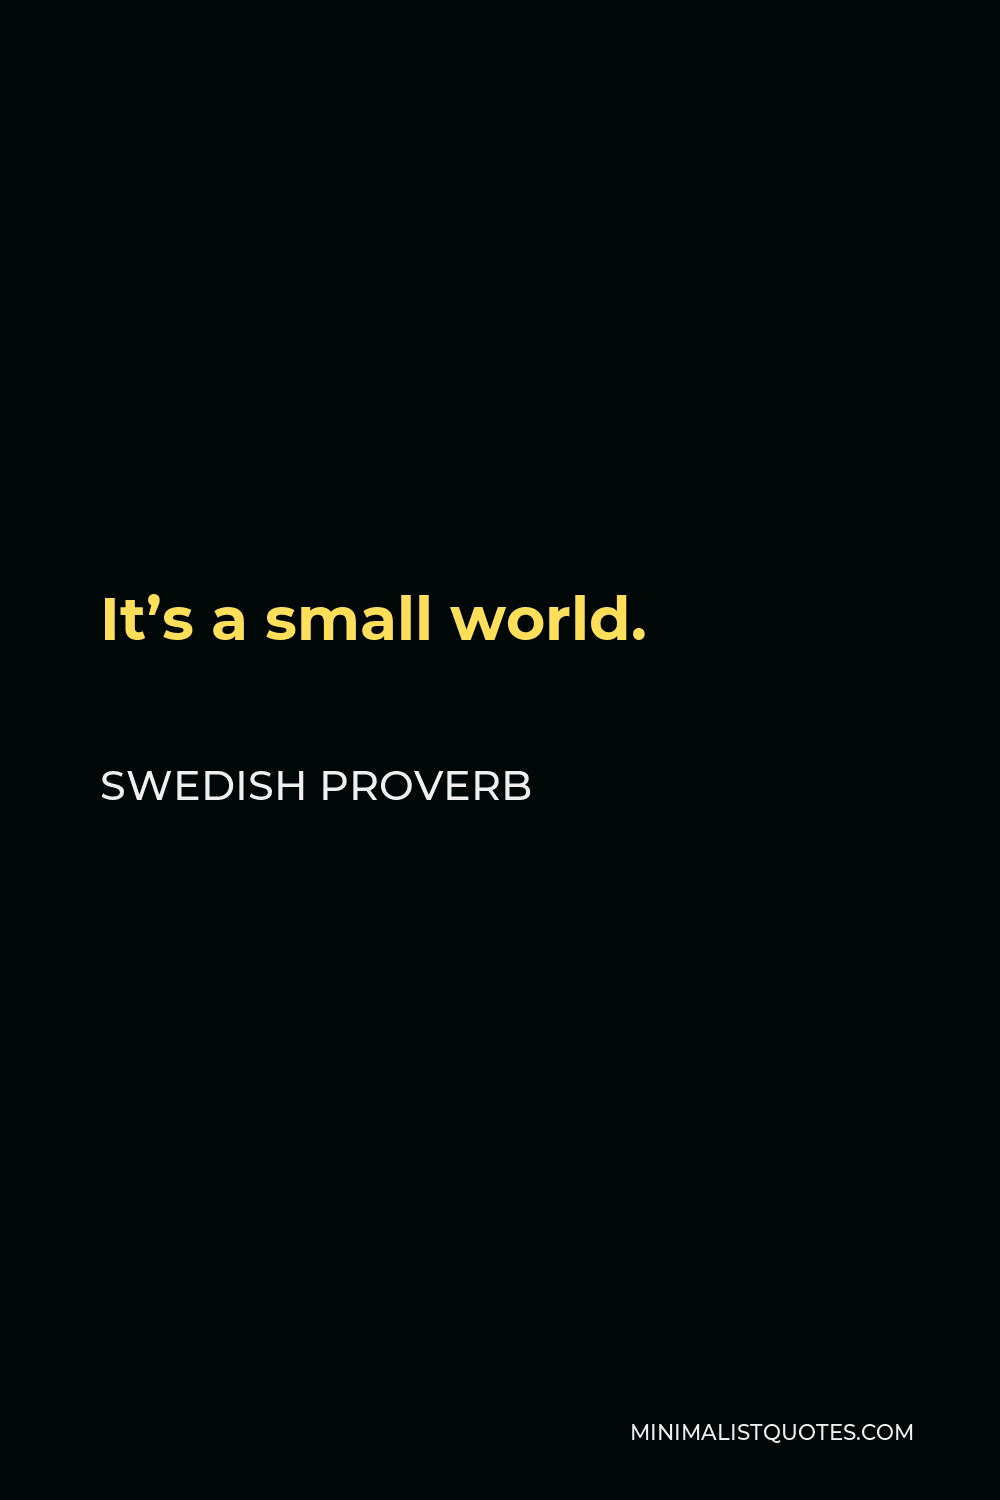 Swedish Proverb Quote - It’s a small world.